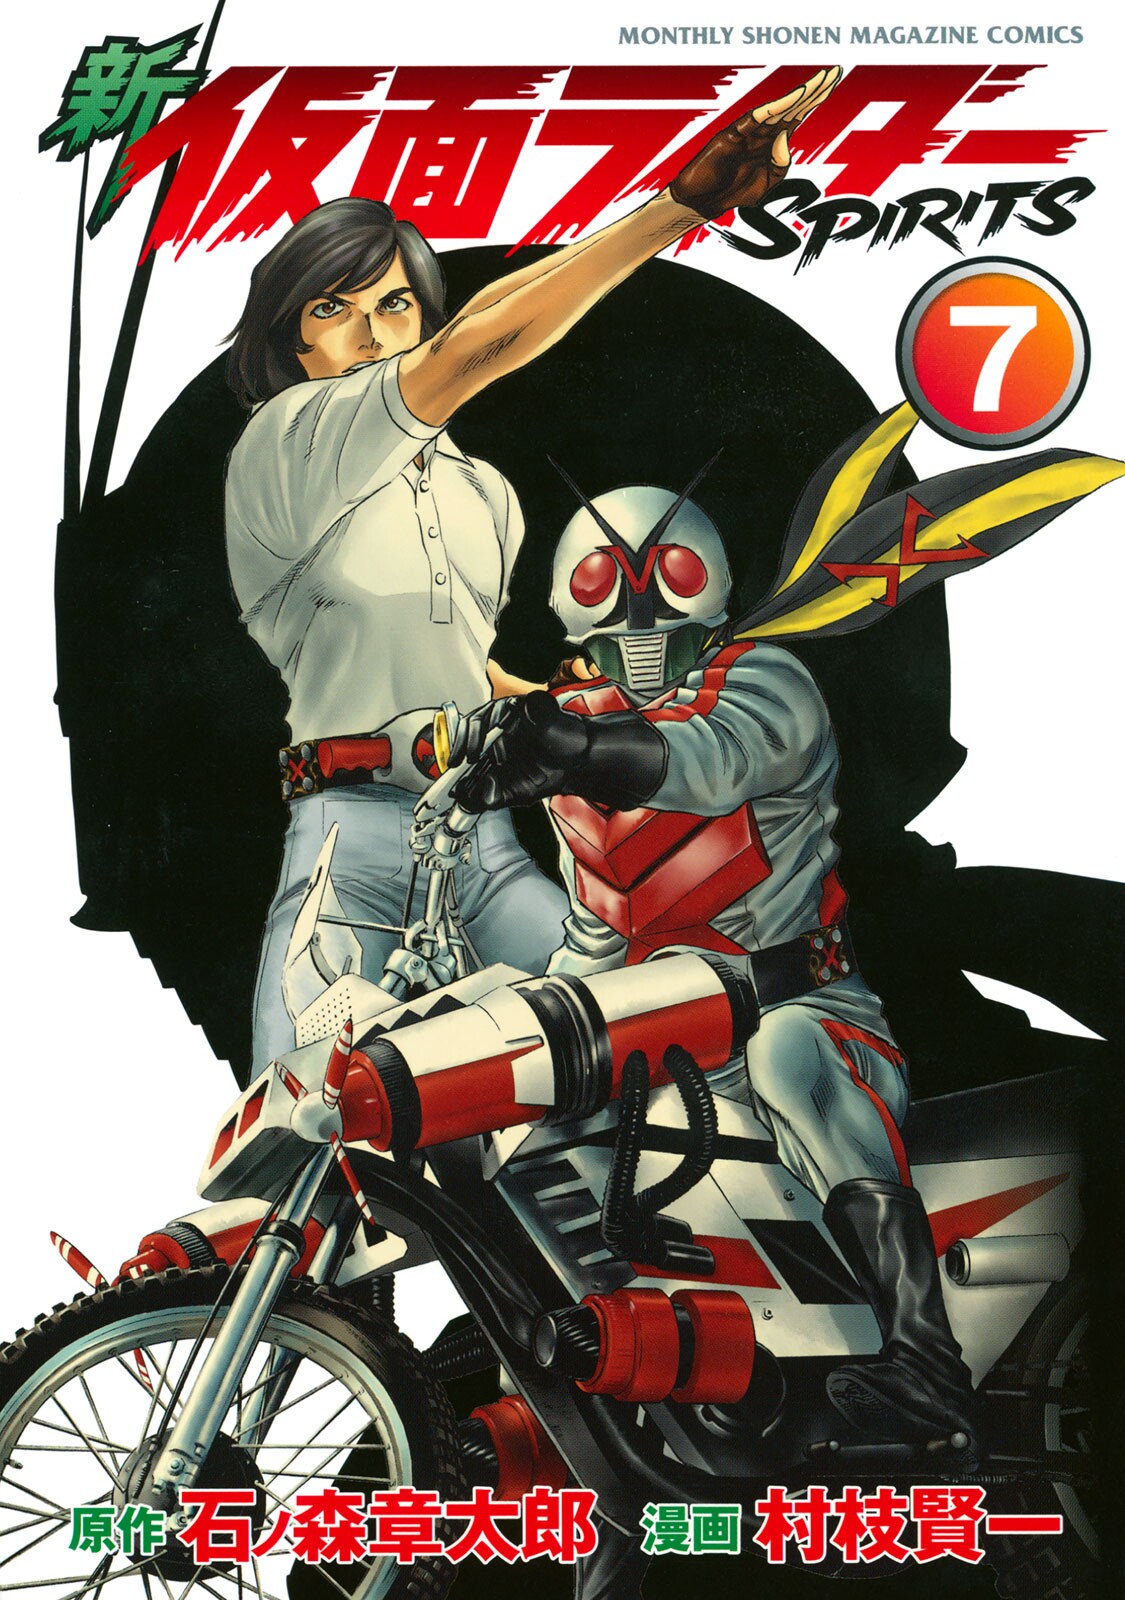 Shin Kamen Rider Spirits cover 63